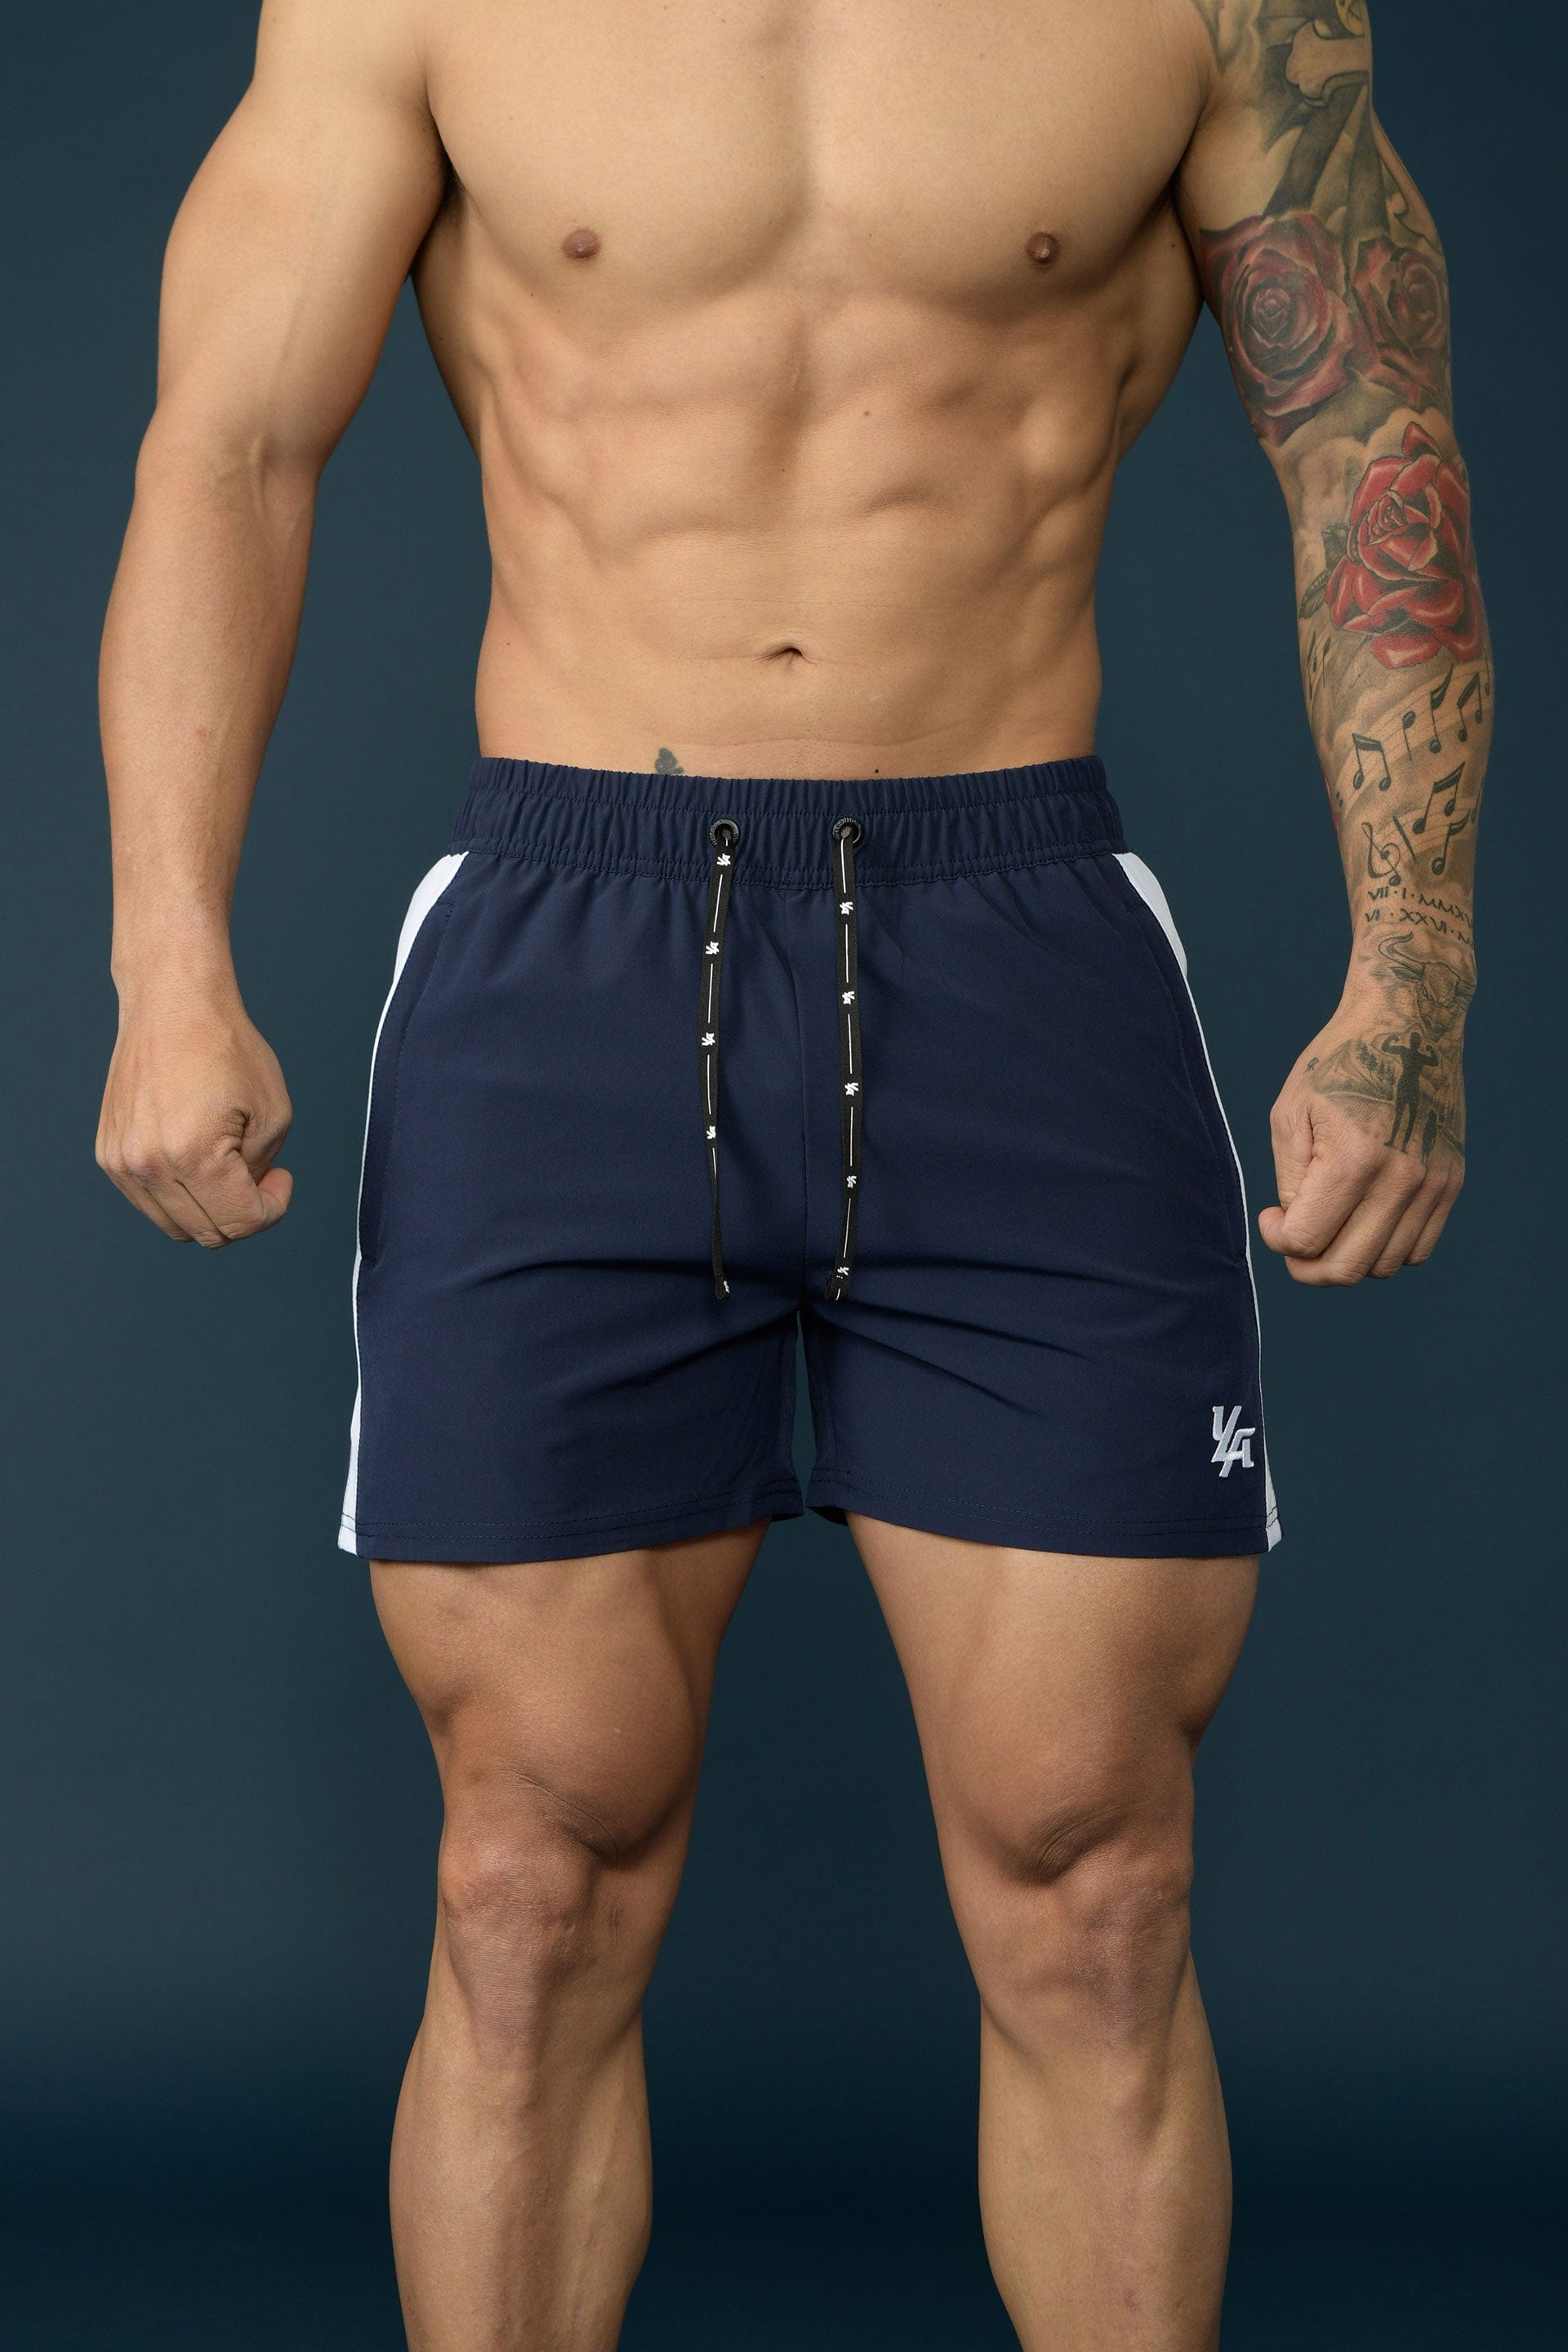 YoungLA Men's Bodybuilding Shorts